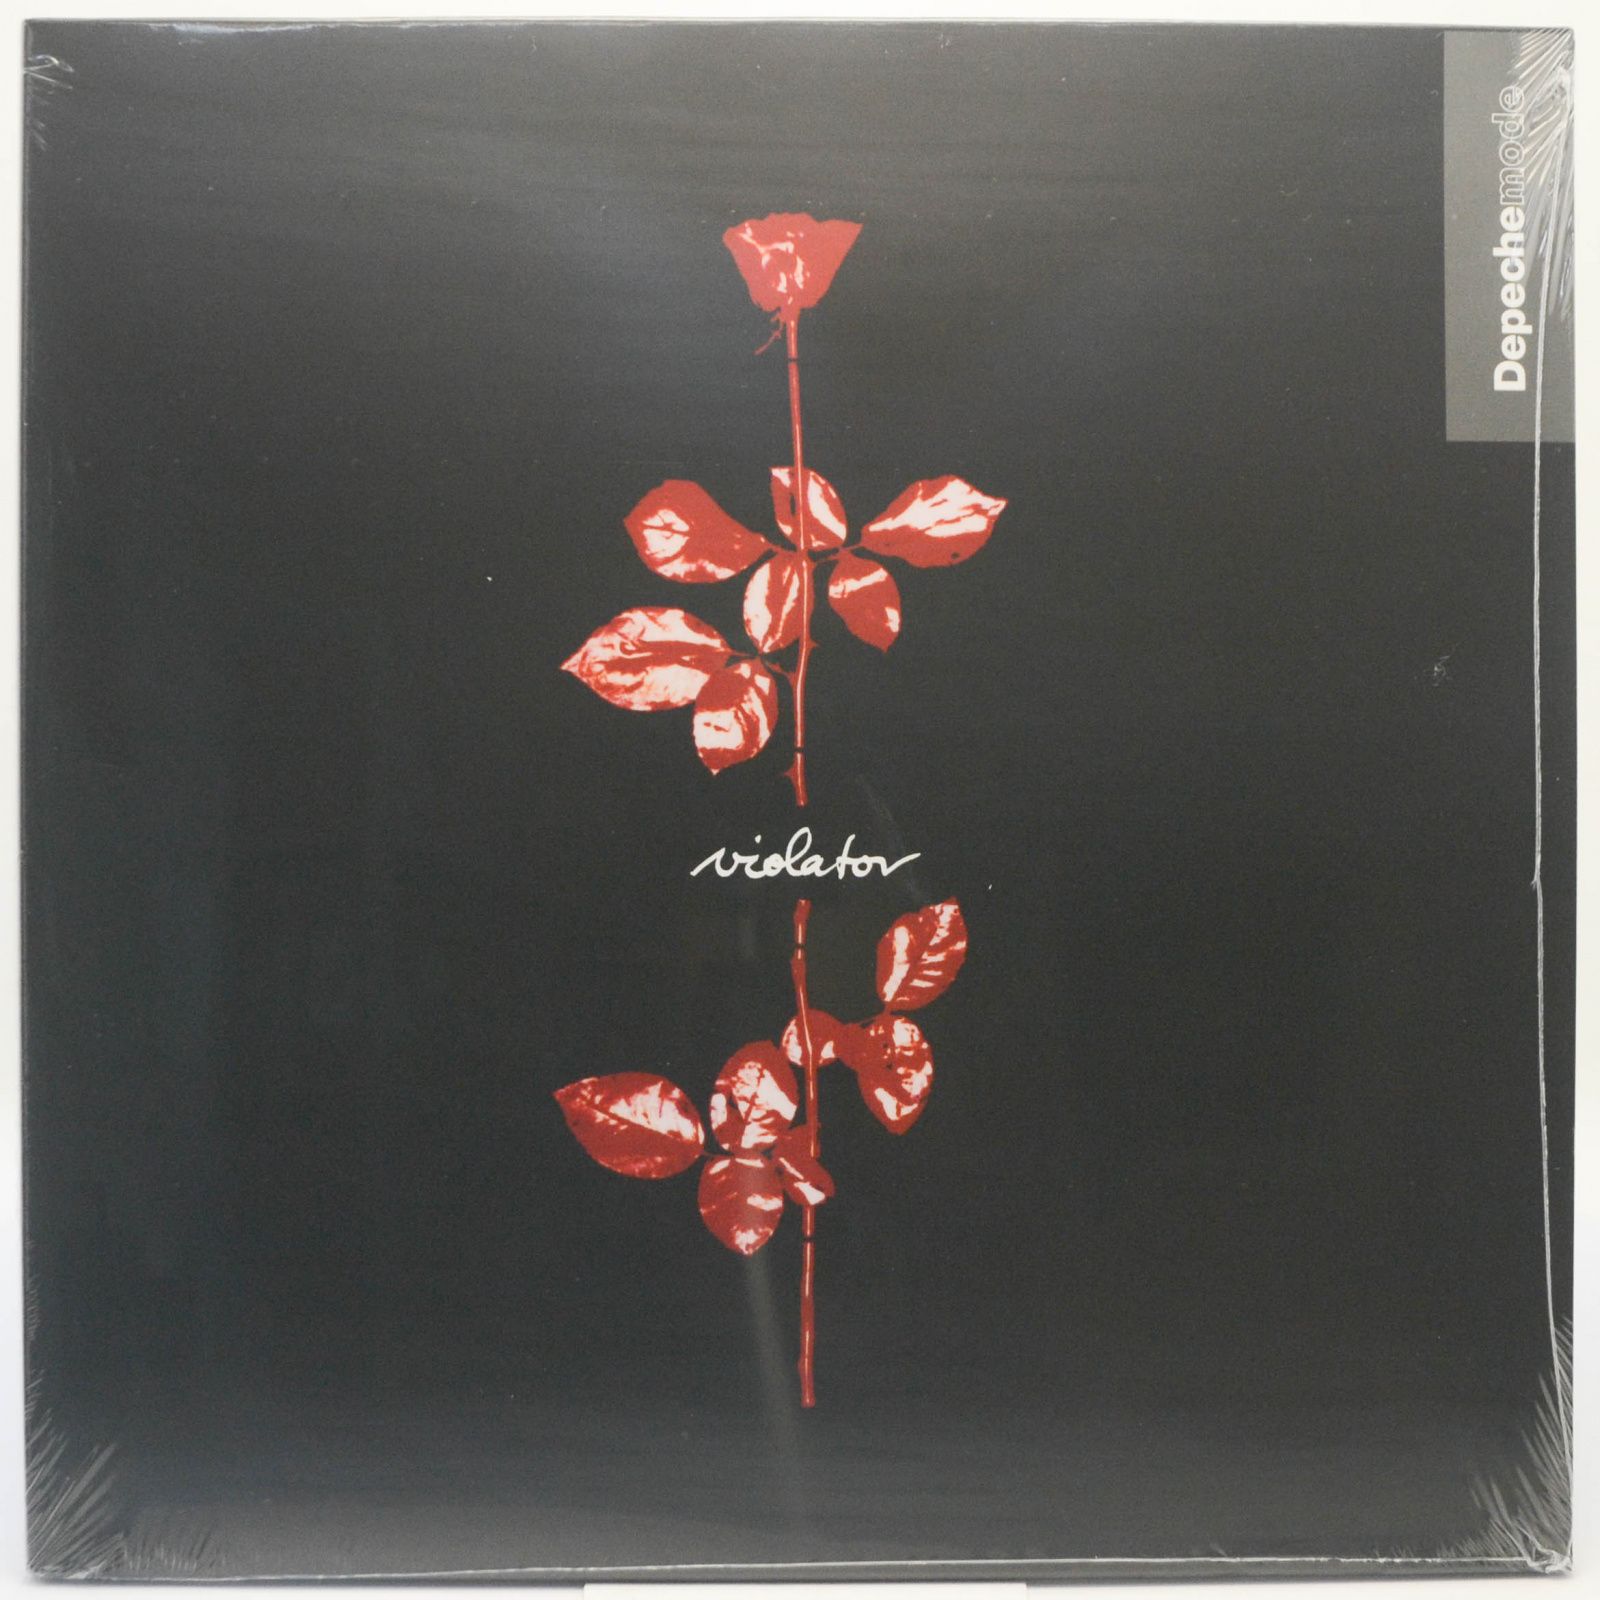 Depeche Mode — Violator, 1990